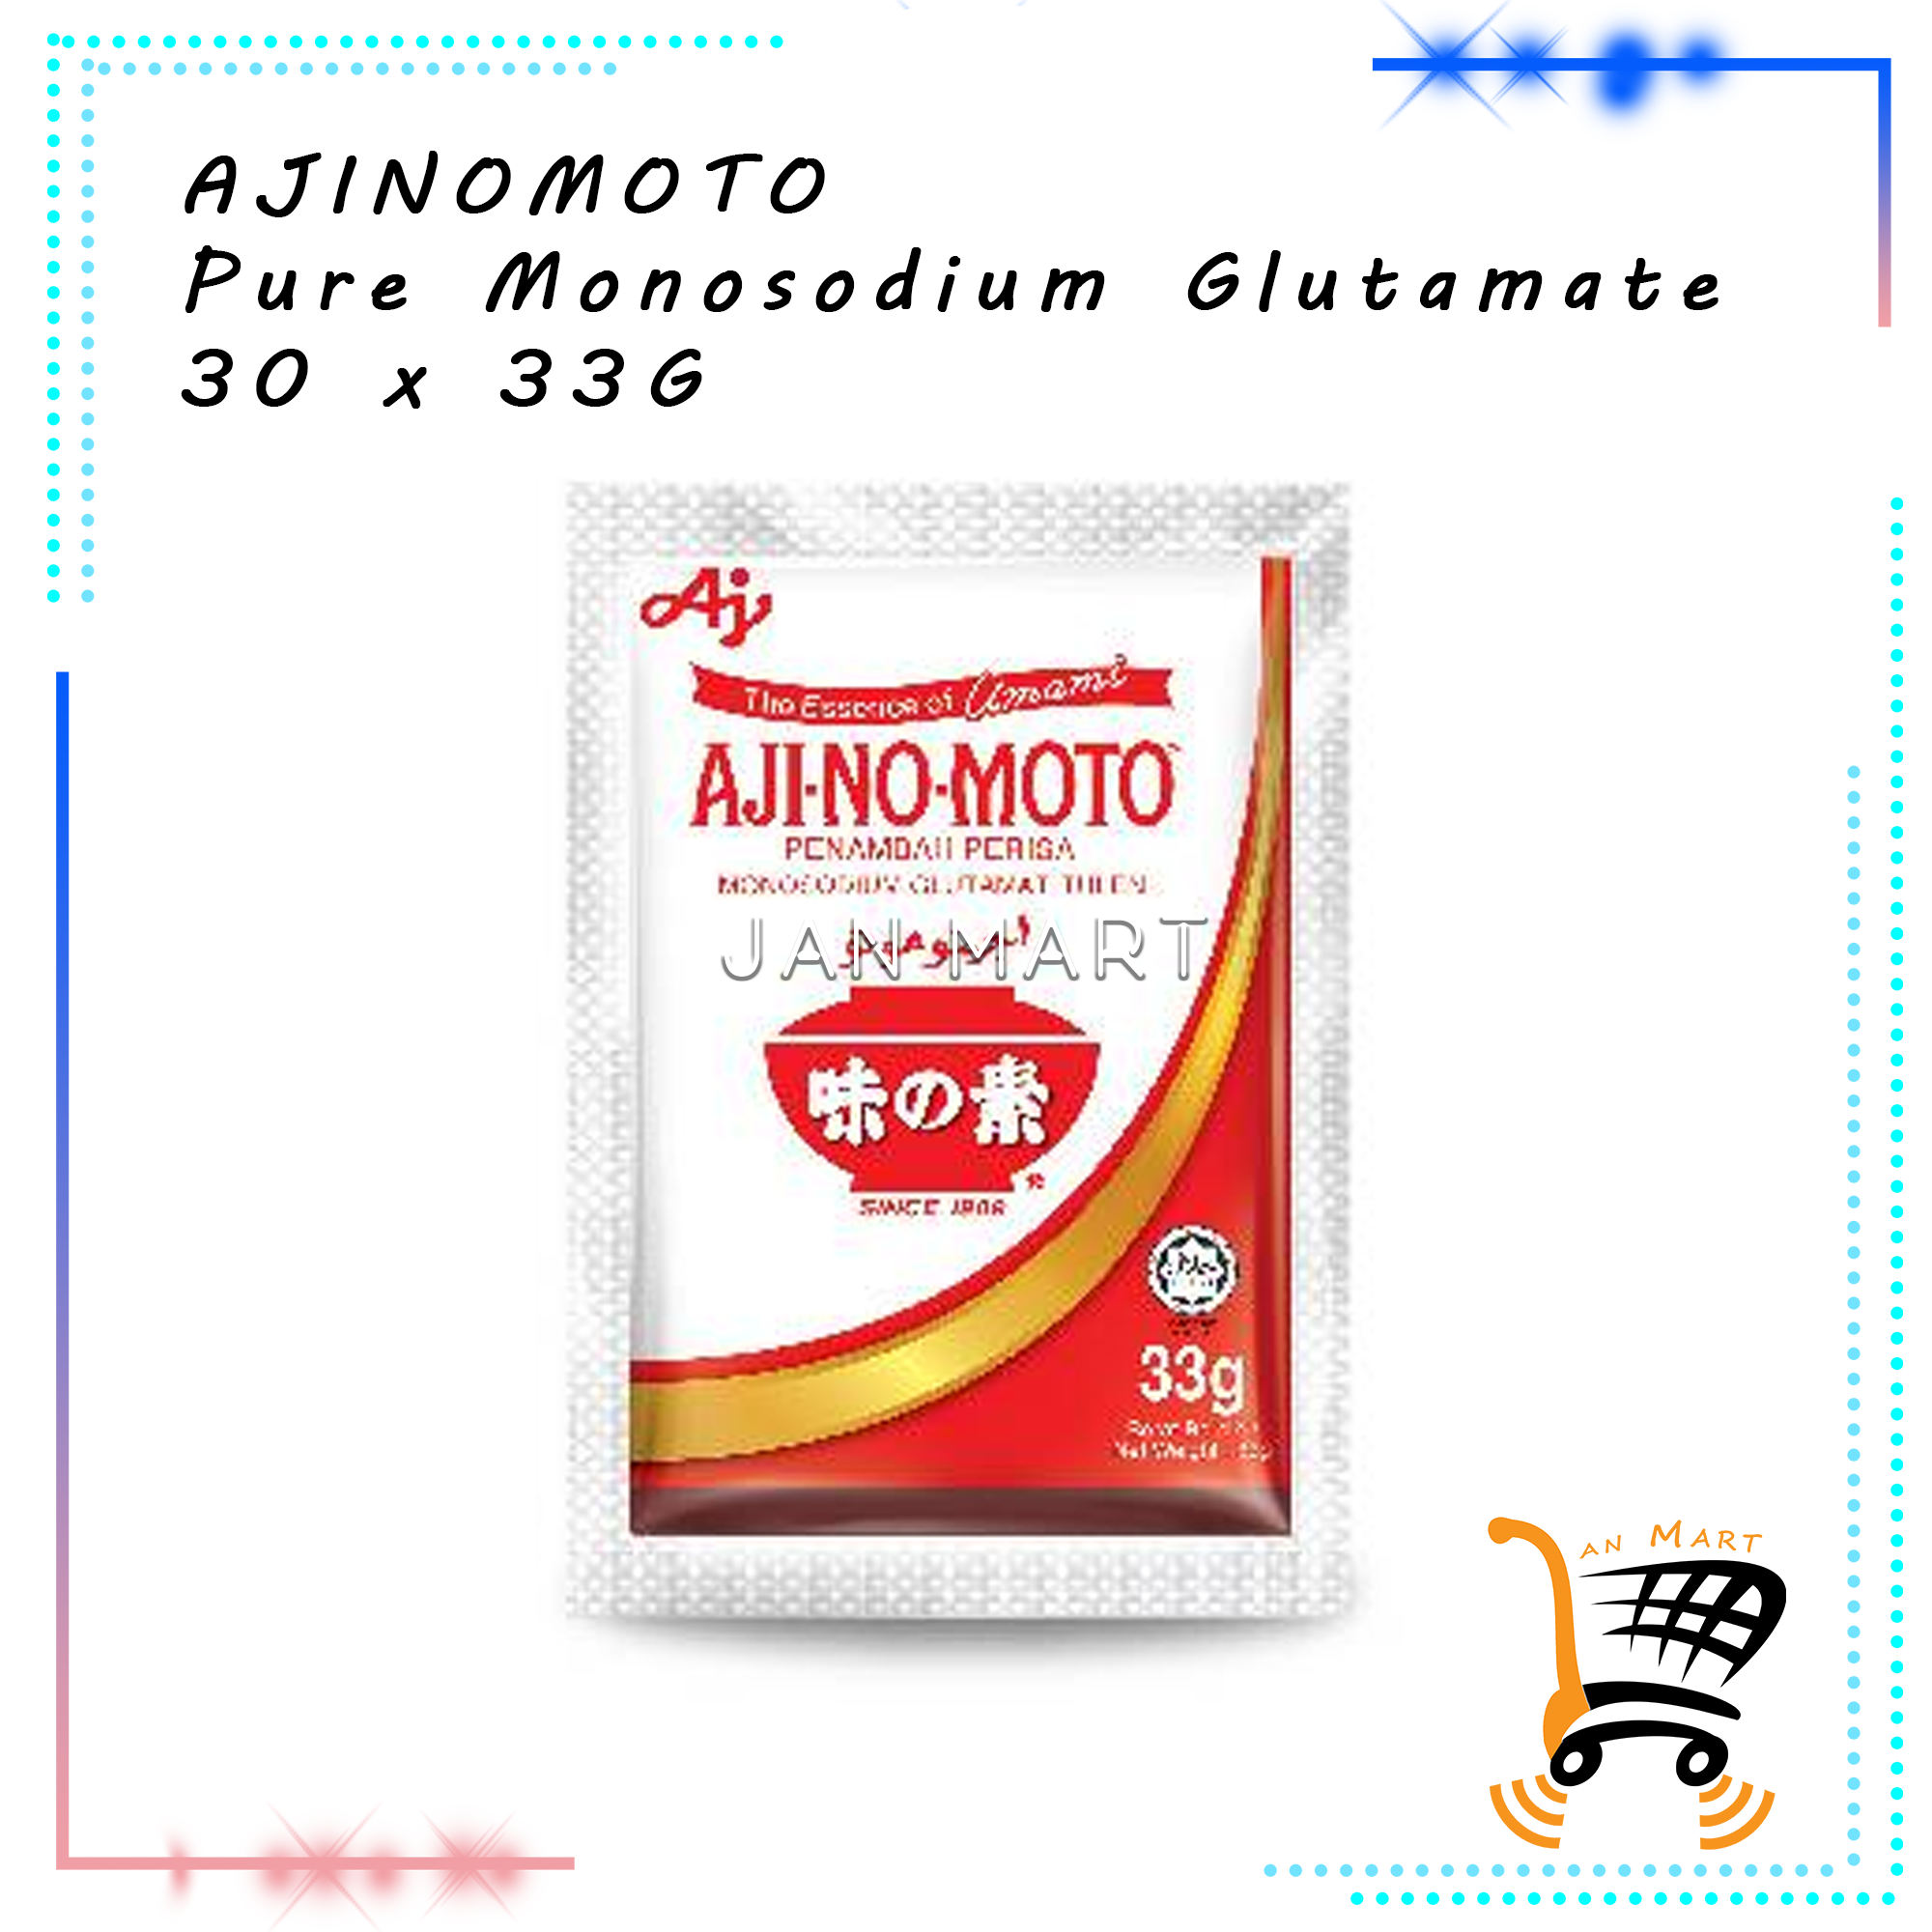 AJINOMOTO Pure Monosodium Glutamate Penambah Perisa 30 x 33G